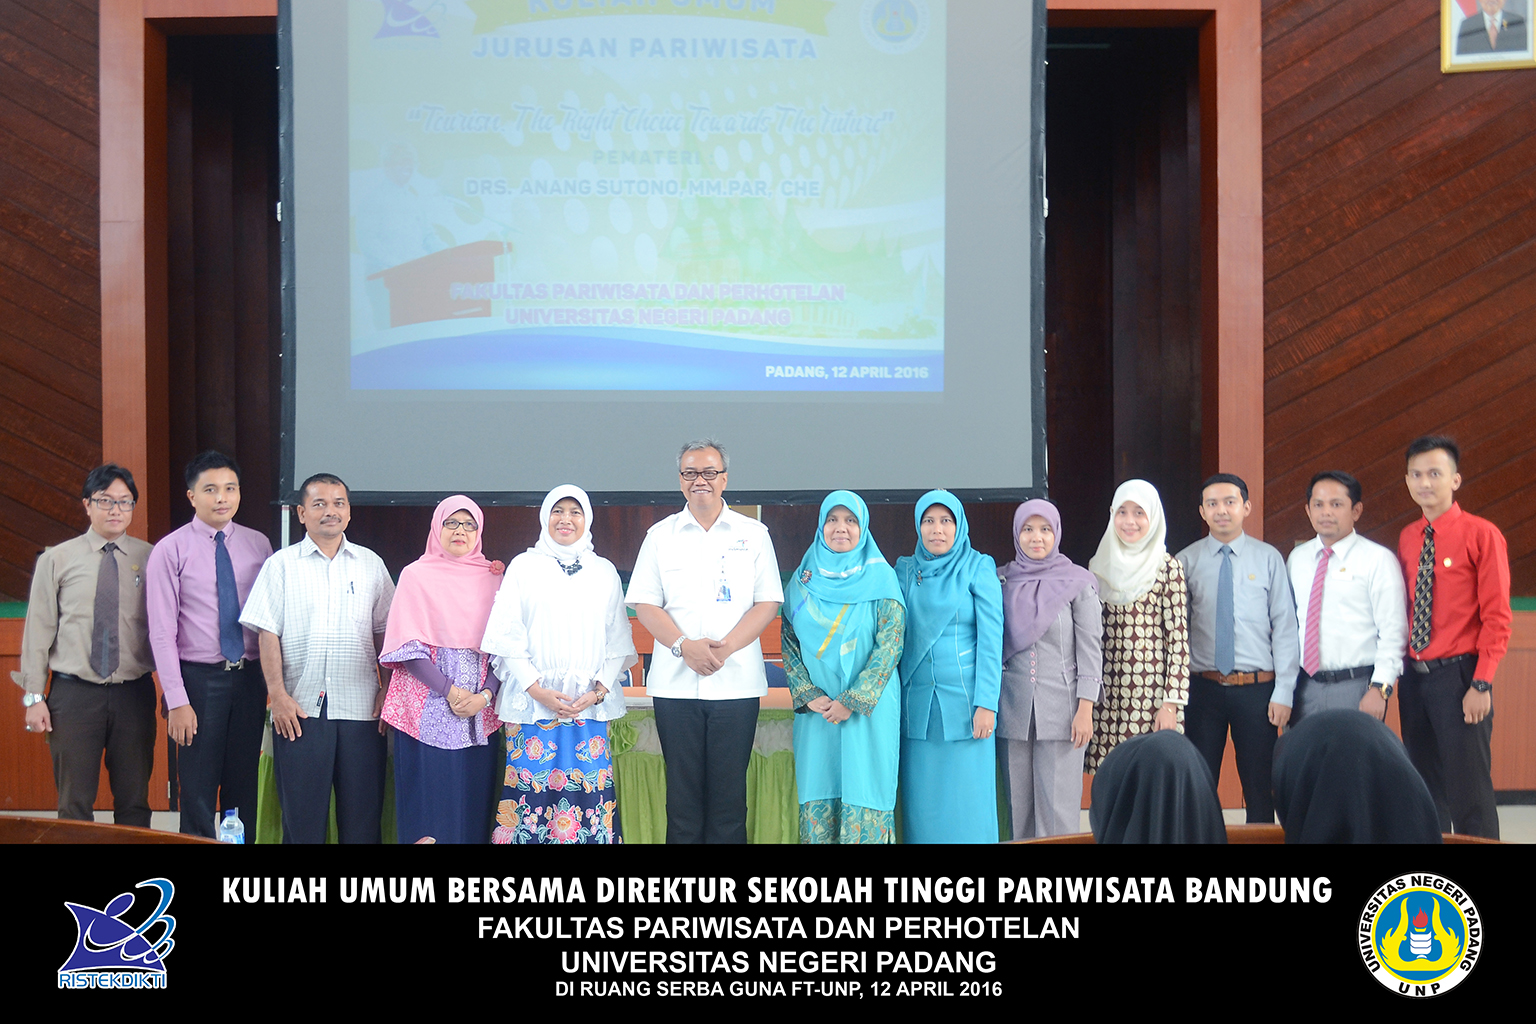 You are currently viewing Kuliah Umum Bersama Direktur Sekolah Tinggi Pariwisata Bandung